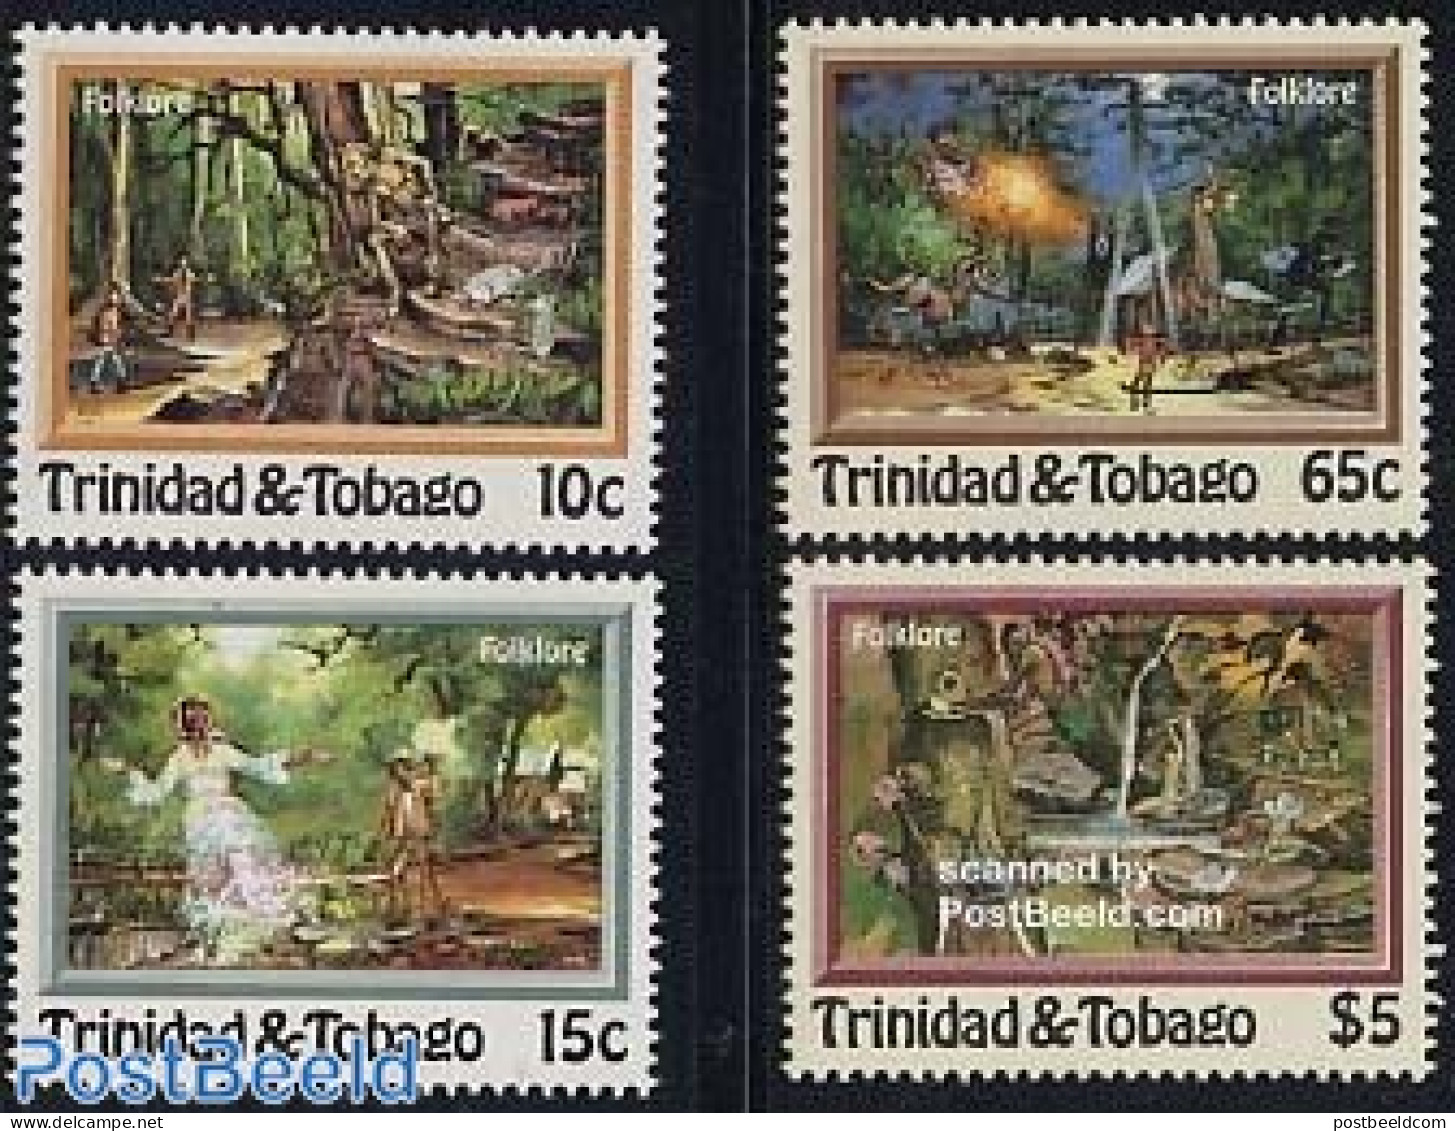 Trinidad & Tobago 1982 Folklore, Tales 4v, Mint NH, Art - Fairytales - Fairy Tales, Popular Stories & Legends